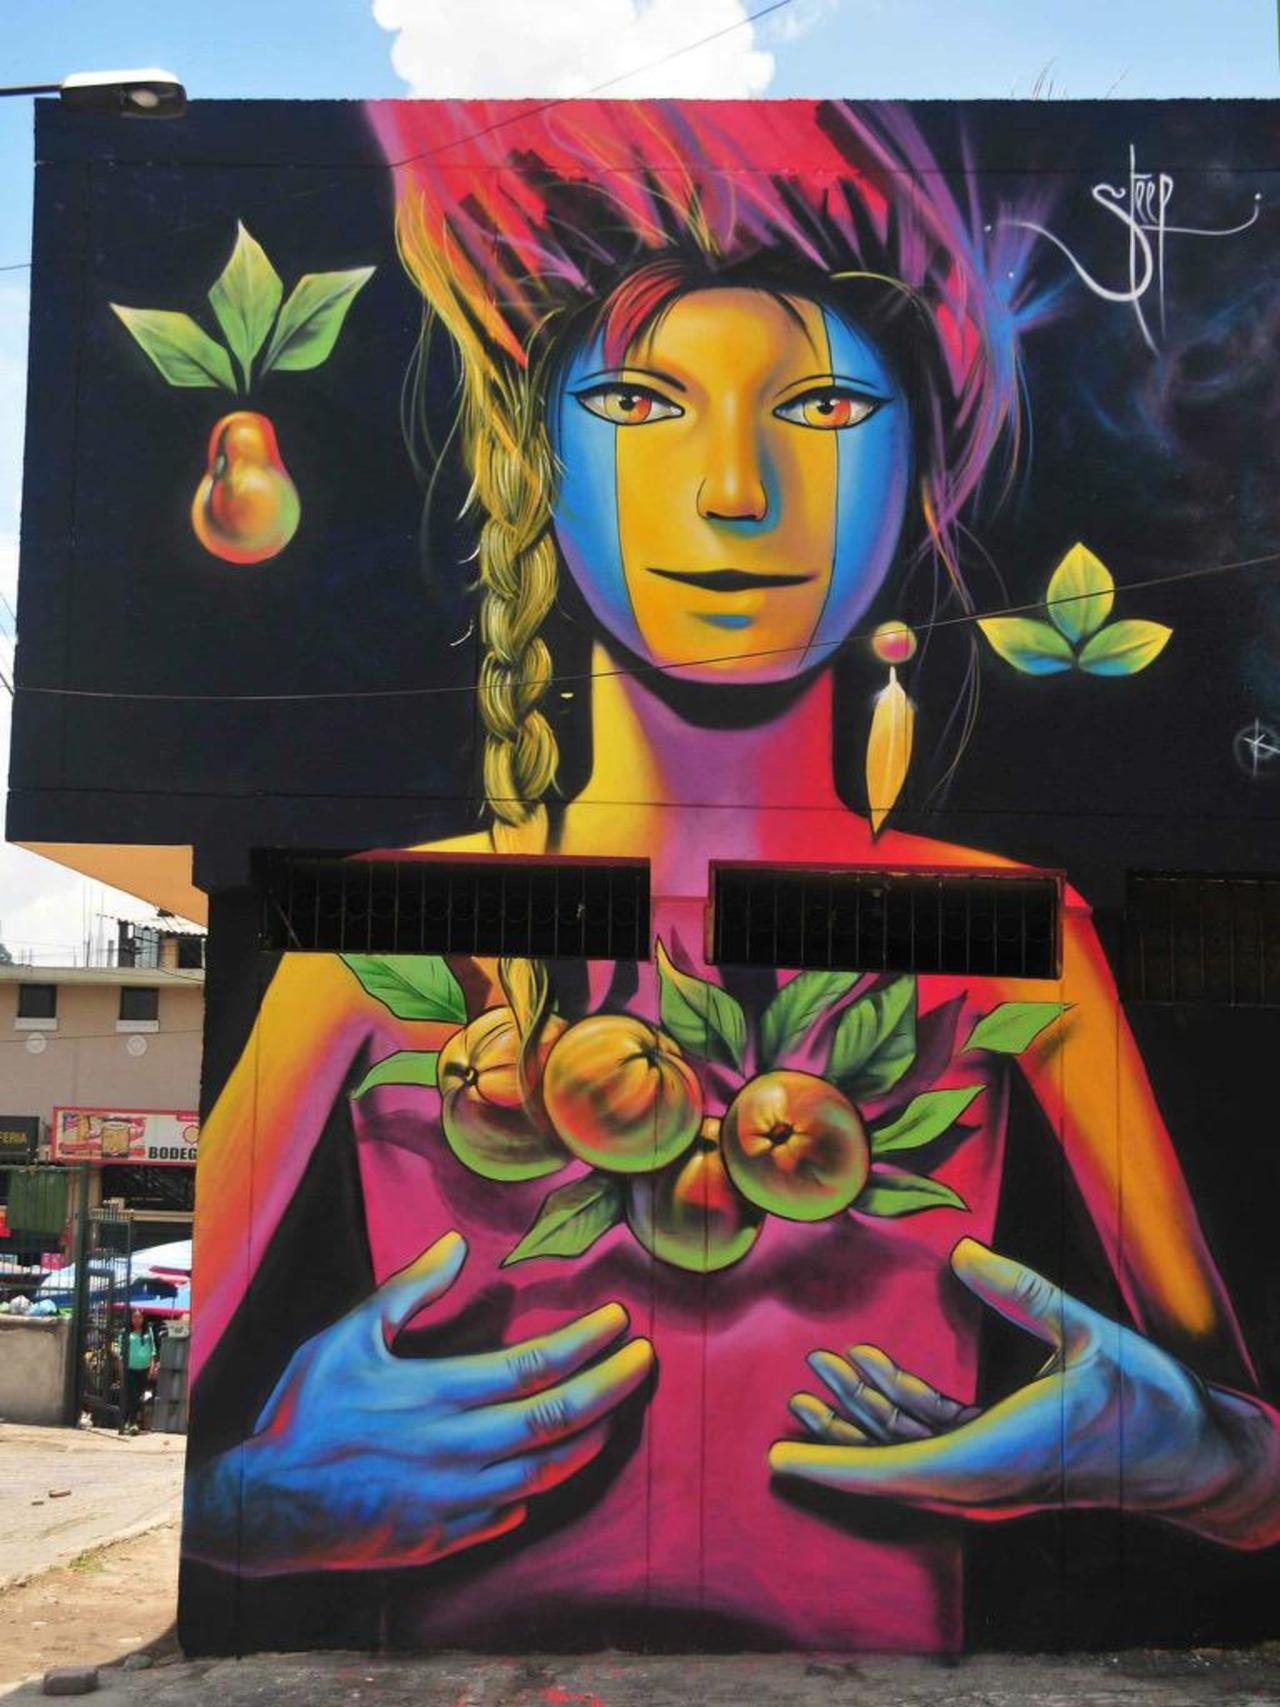 RT @BlossomTweetMe: Cool! Street Art by Steep

#art #graffiti #mural #streetart http://t.co/9pQKcAsjYS MT @GoogleStreetArt